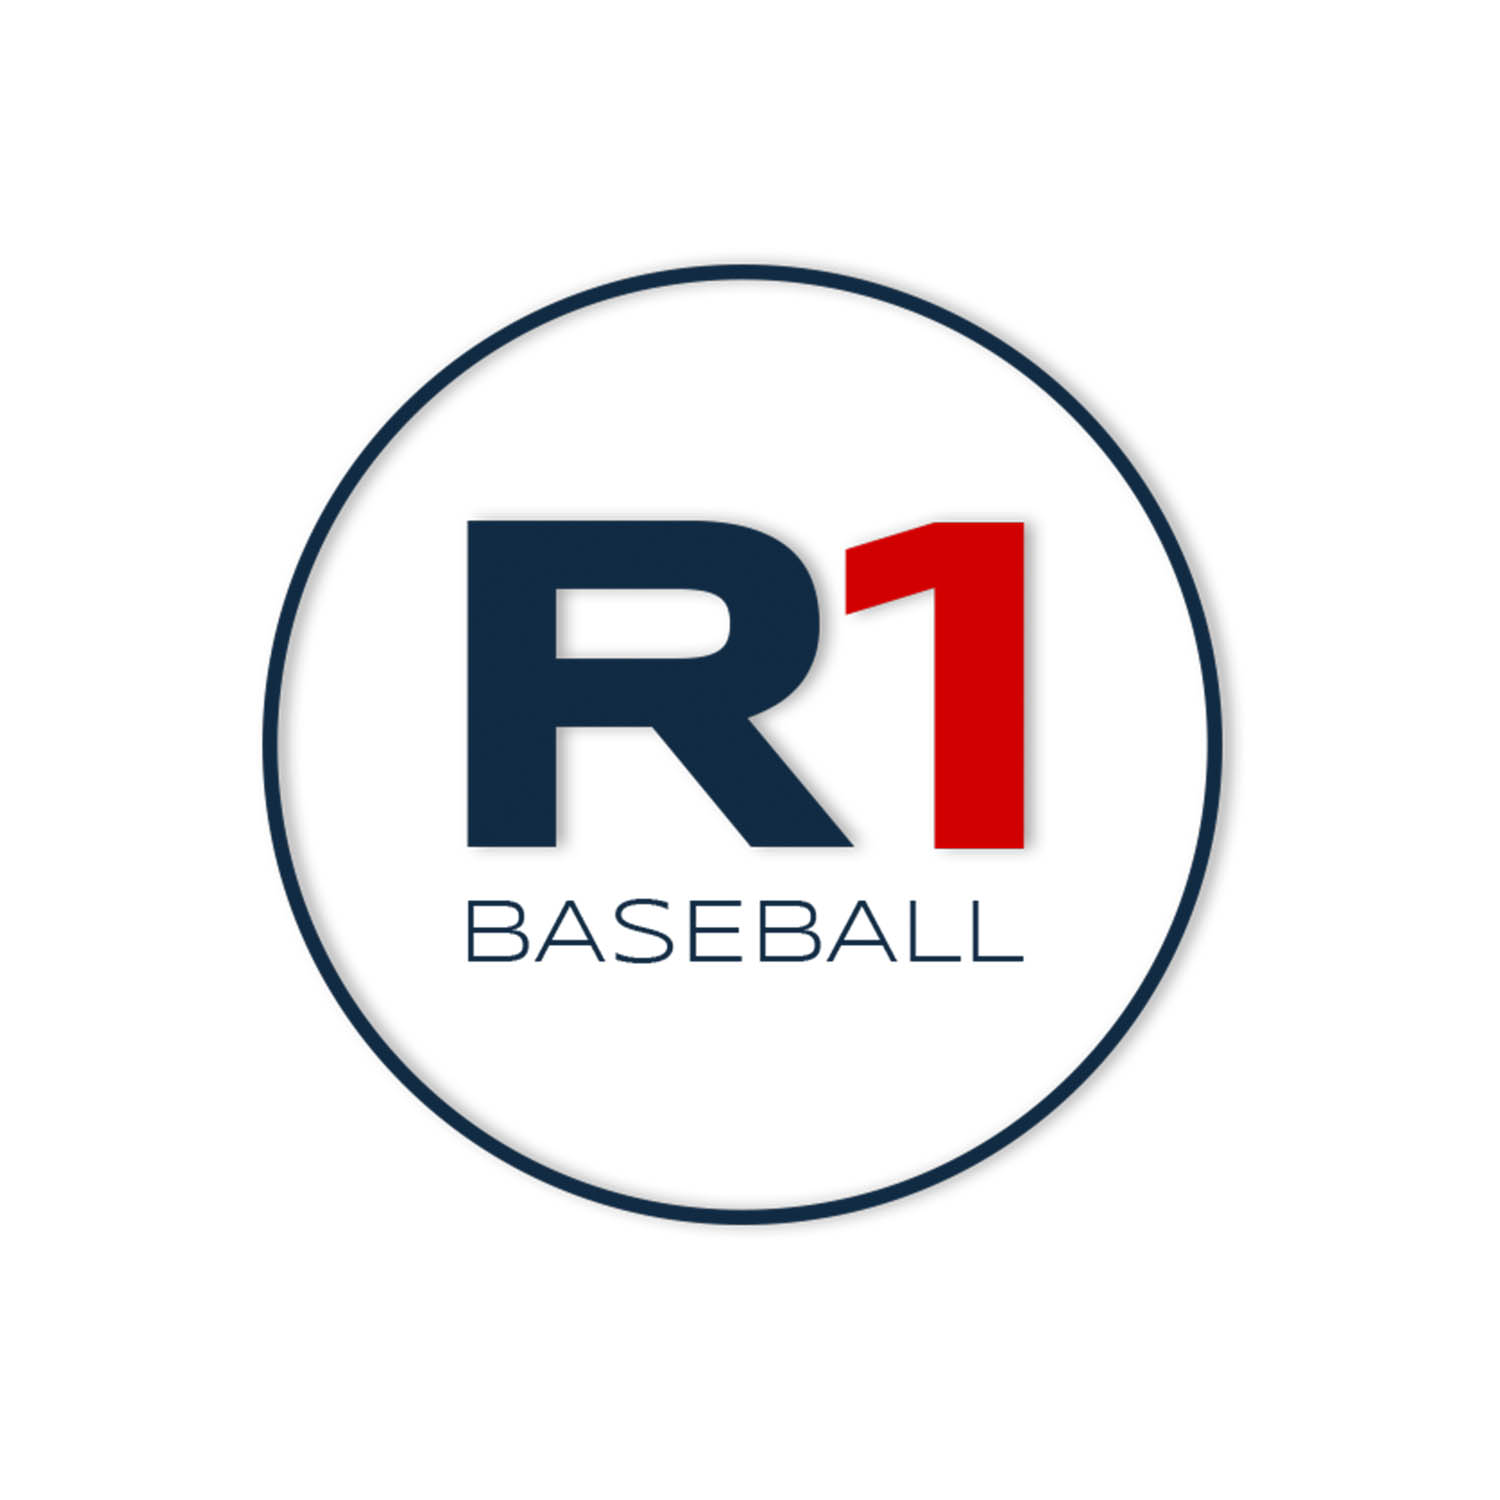 REP1 Baseball Logo